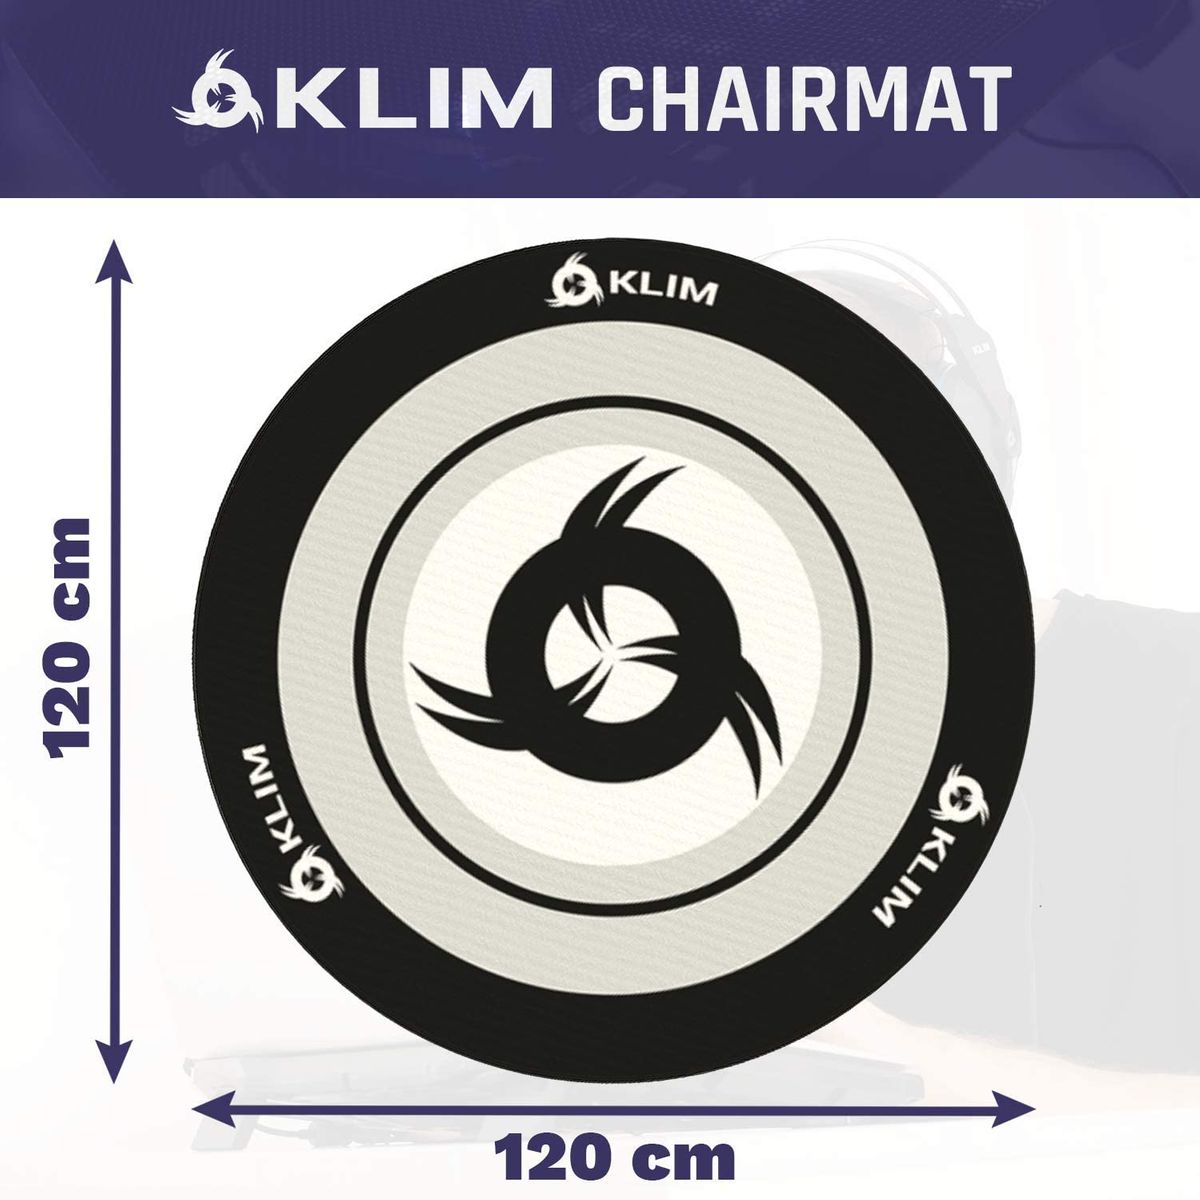 KLIM Chair Mat - Floor Protector Mat with Anti-slip Base, Extra Large Round Floor Mat + 120 cm Diameter Rug (Grey & Black)